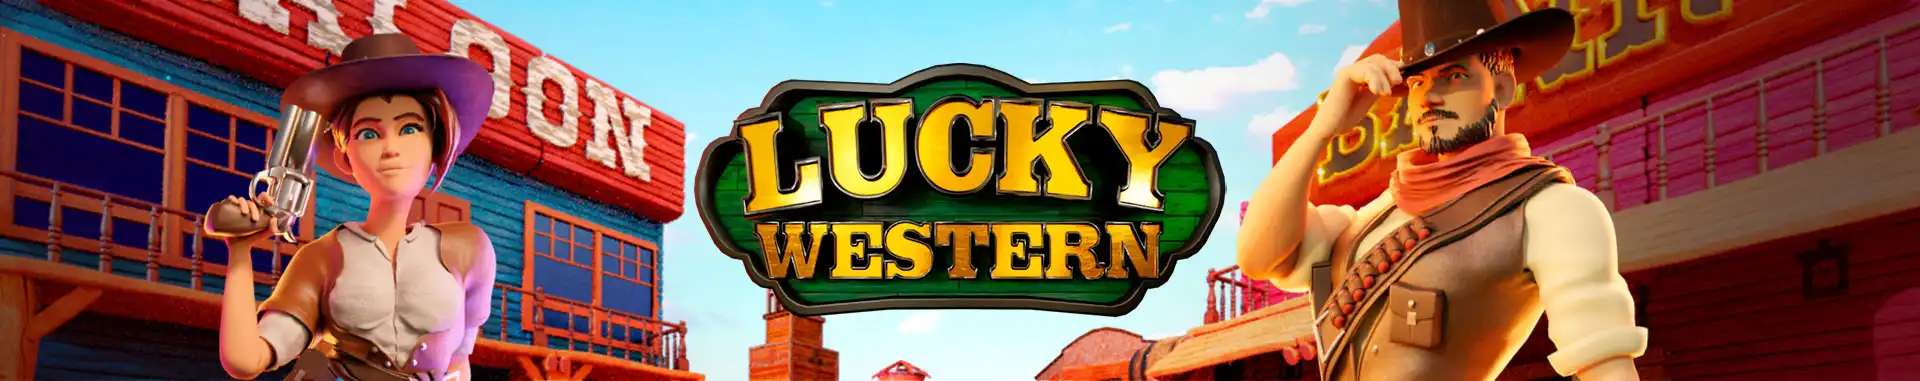 Tragaperras online Lucky Western